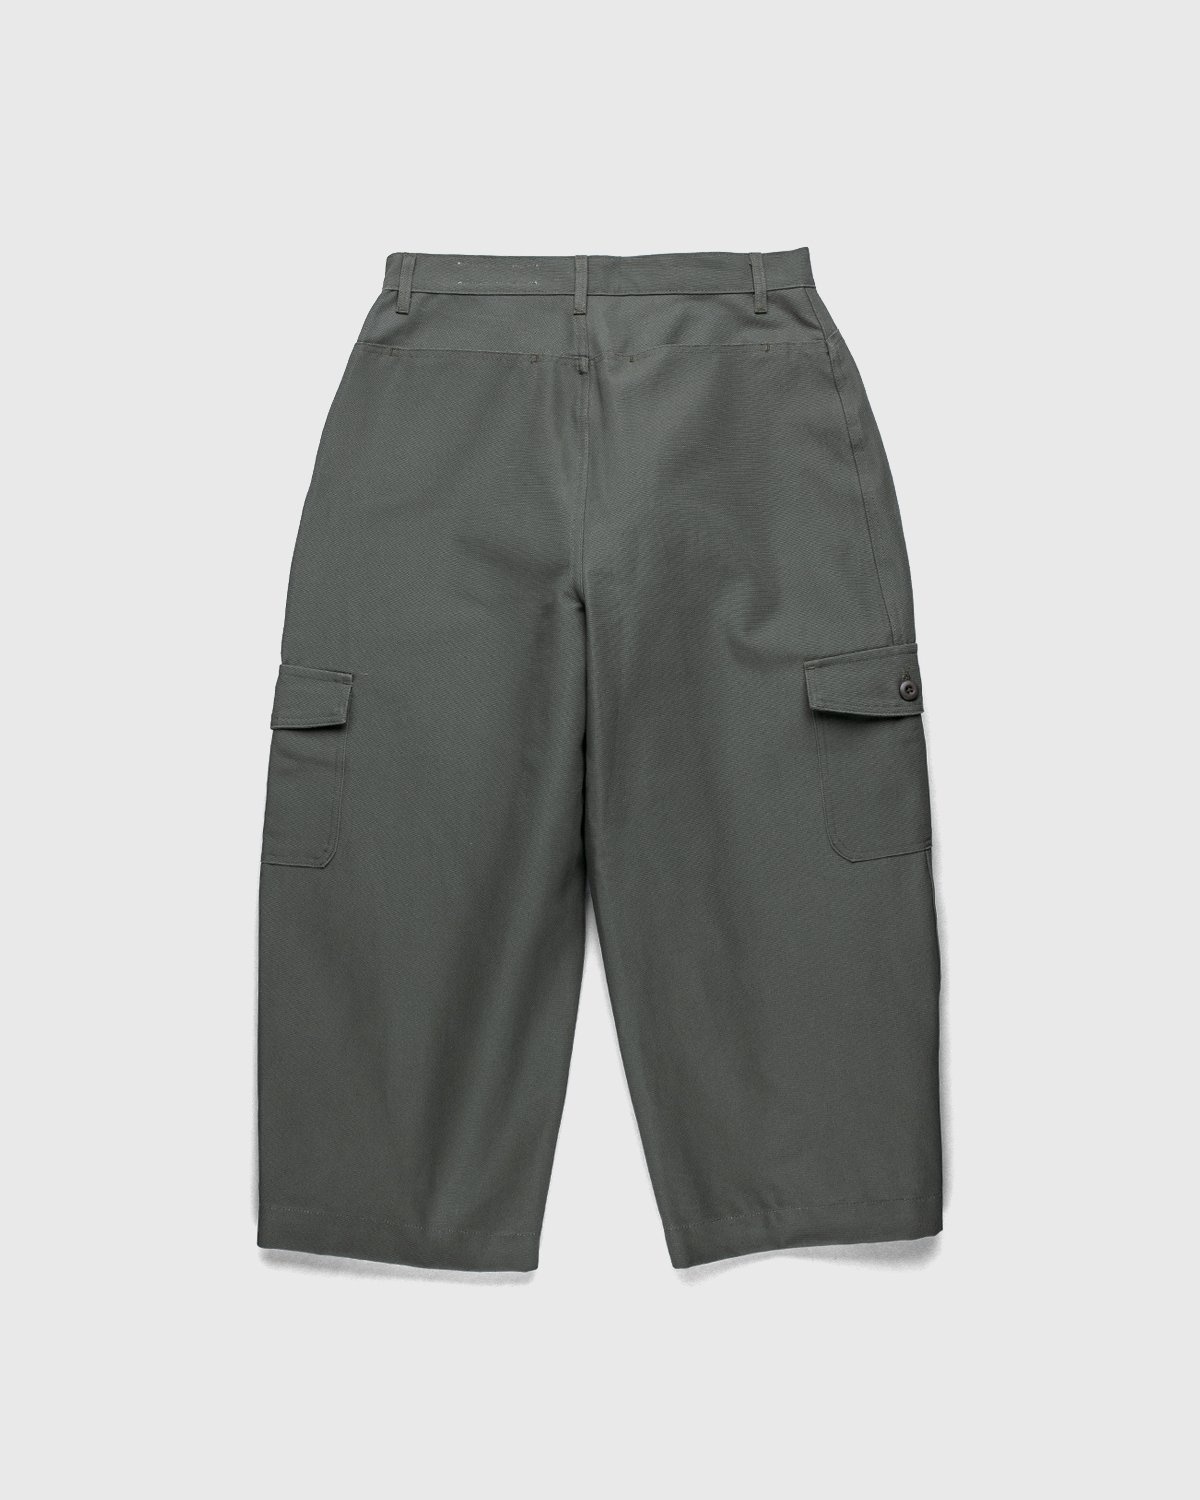 Darryl Brown – Japanese Cargo Pants Military Olive - Pants - Green - Image 2